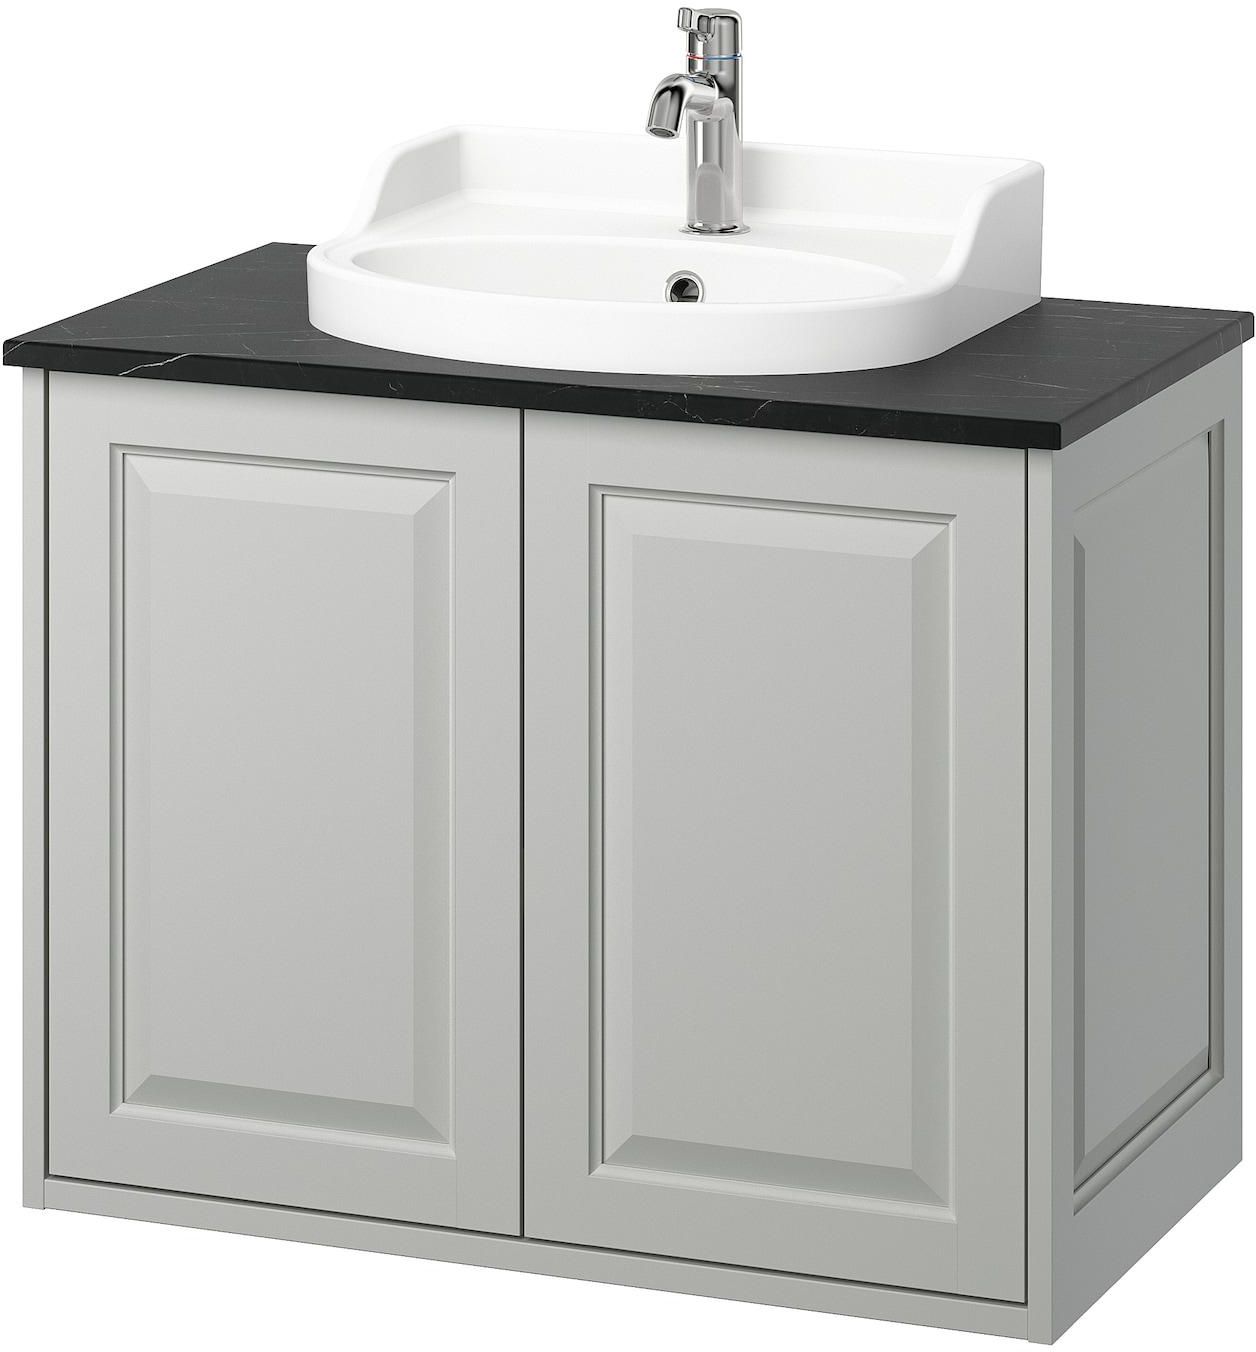 TÄNNFORSEN / RUTSJÖN Wash-stnd w doors/wash-basin/tap - light grey/black marble effect 82x49x76 cm